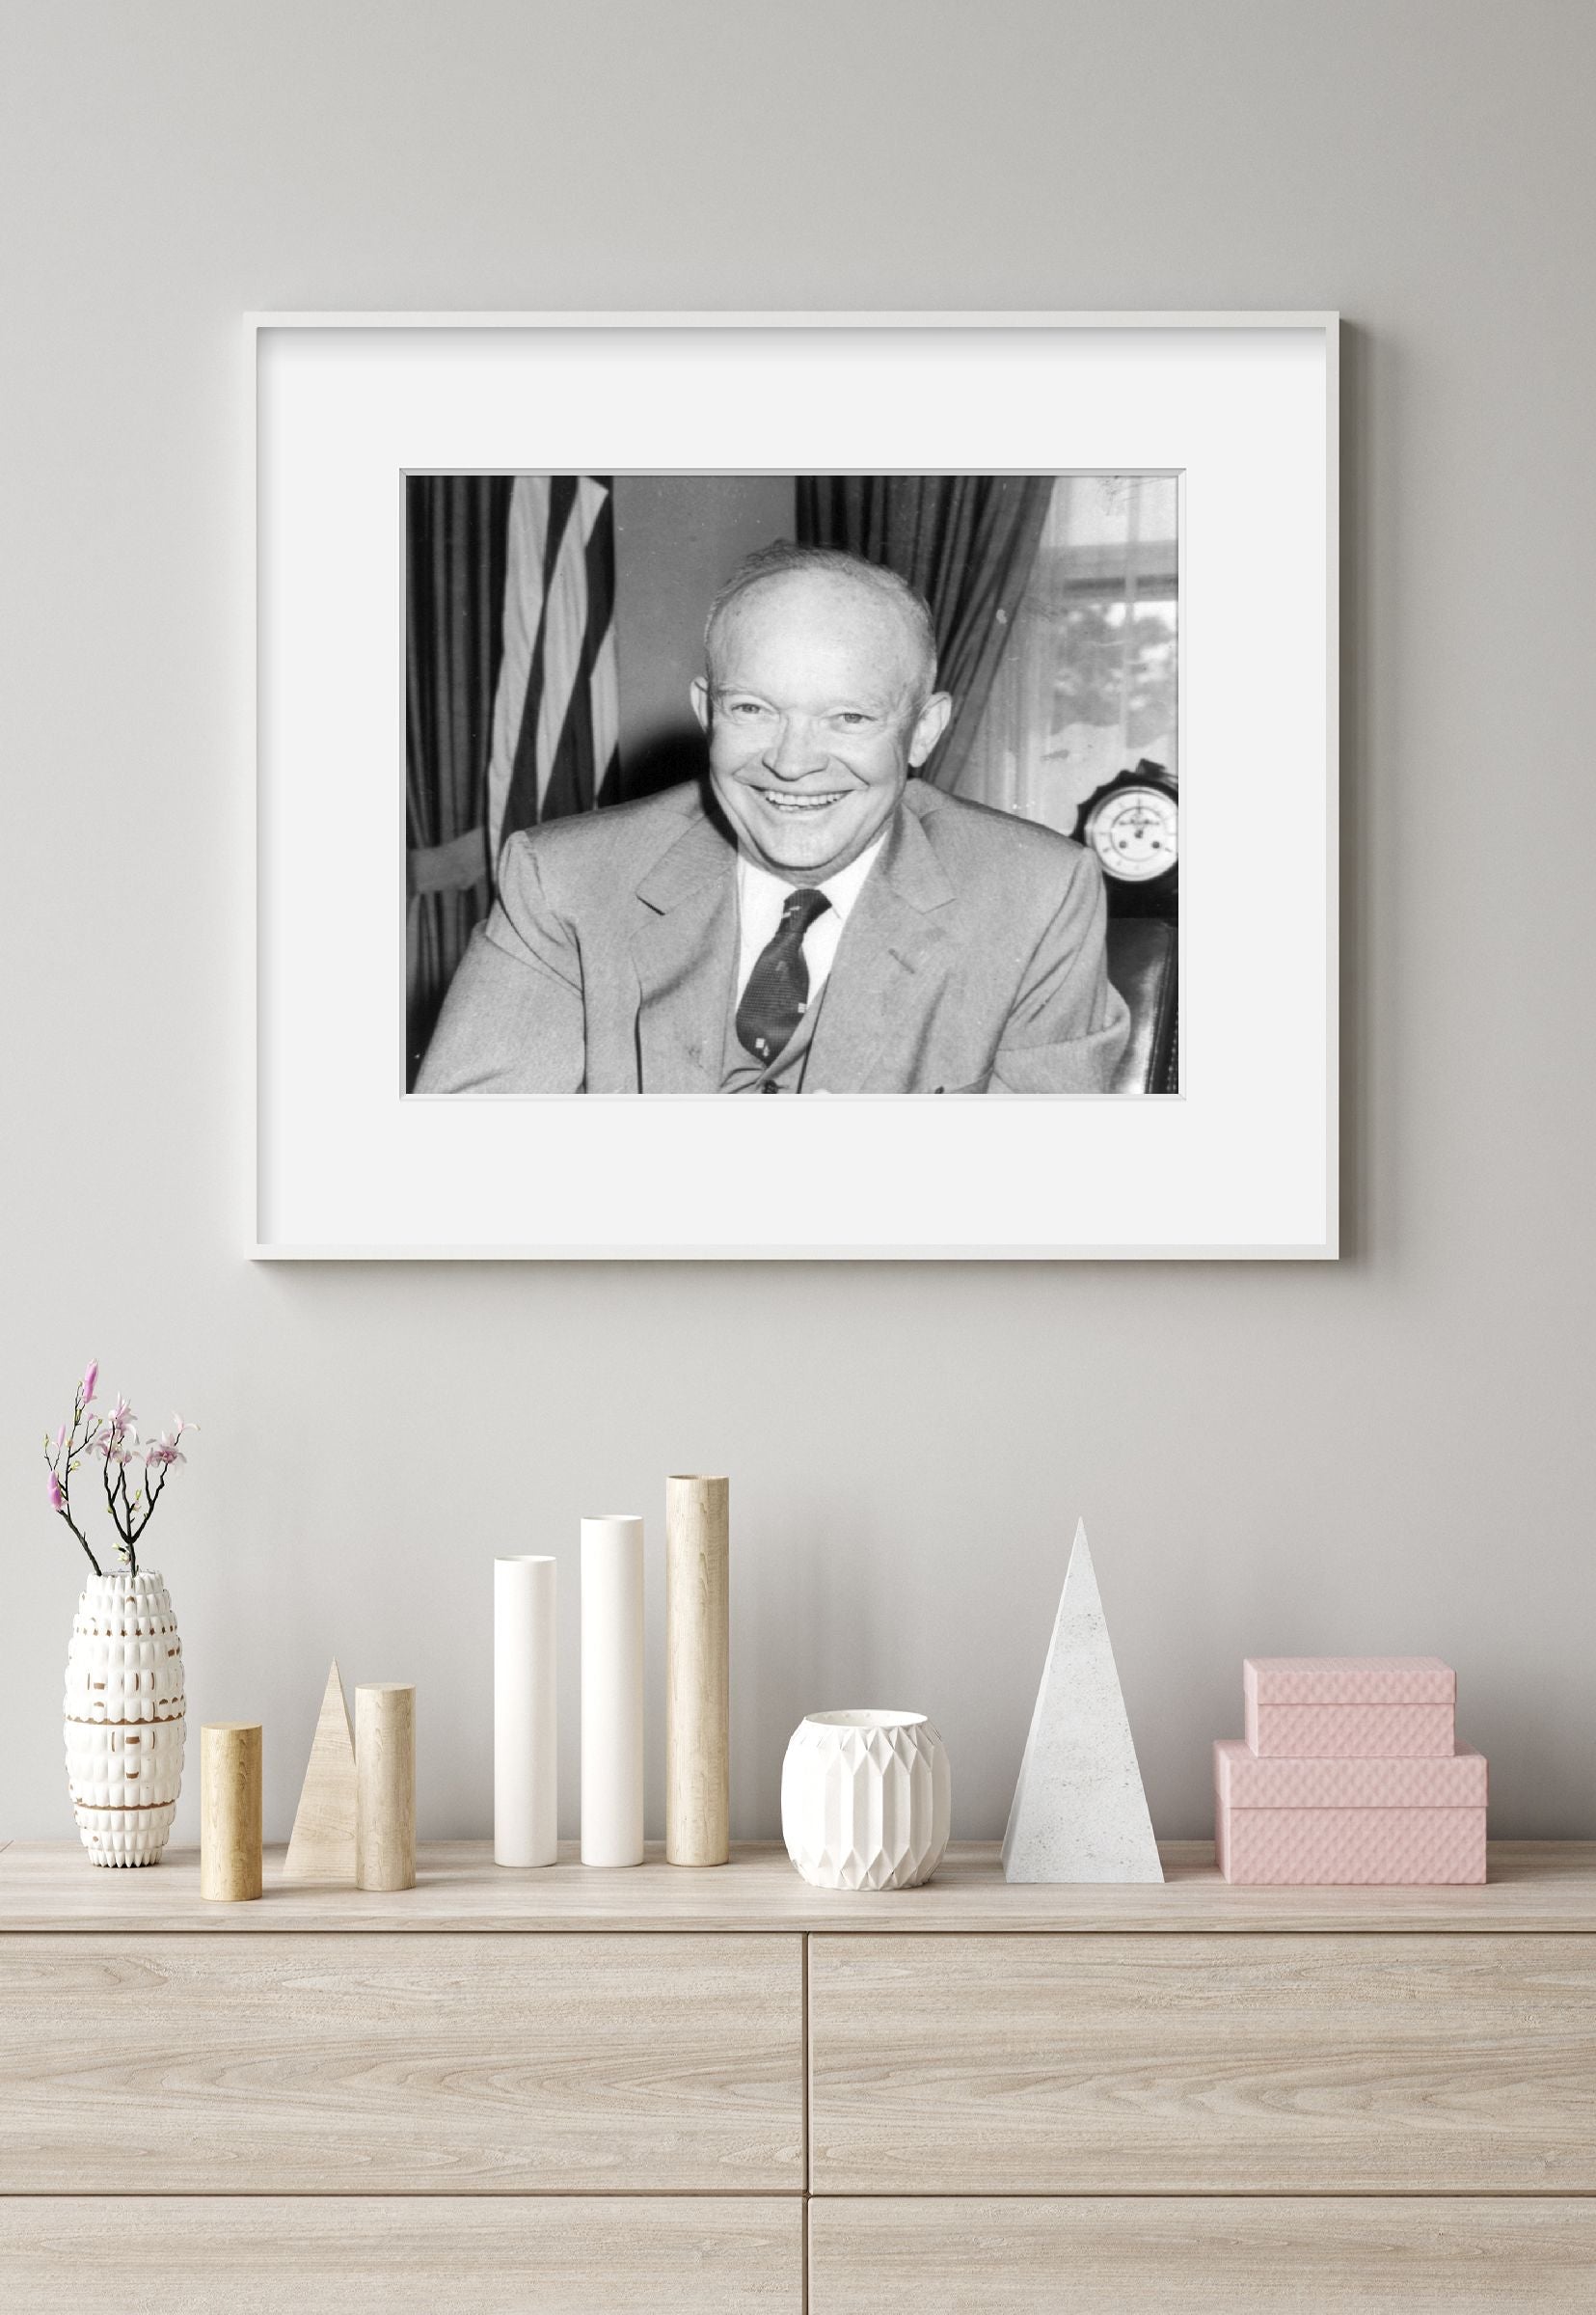 1957 Oct. 14 photograph of Dwight David Eisenhower, Pres., U.S., 1890-1969 Summa